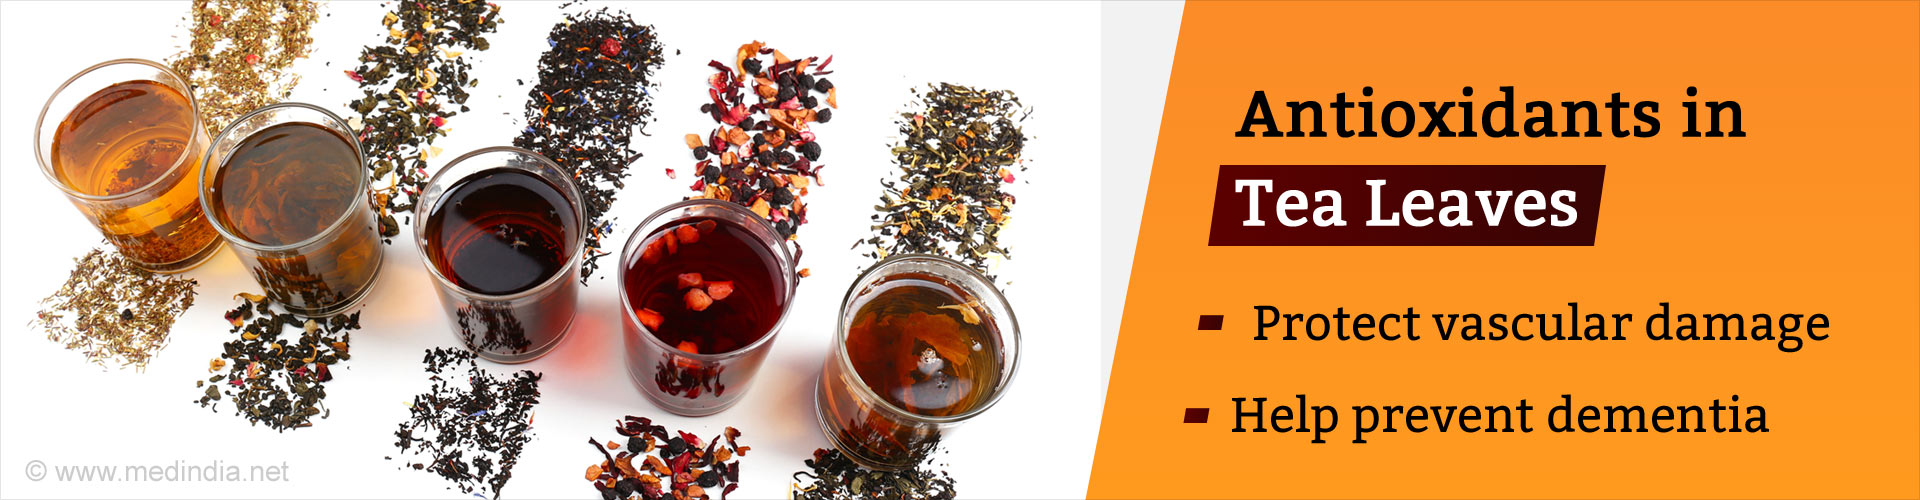 Antioxidants in tea leaves
- protect vascular damage
- help prevent dementia
